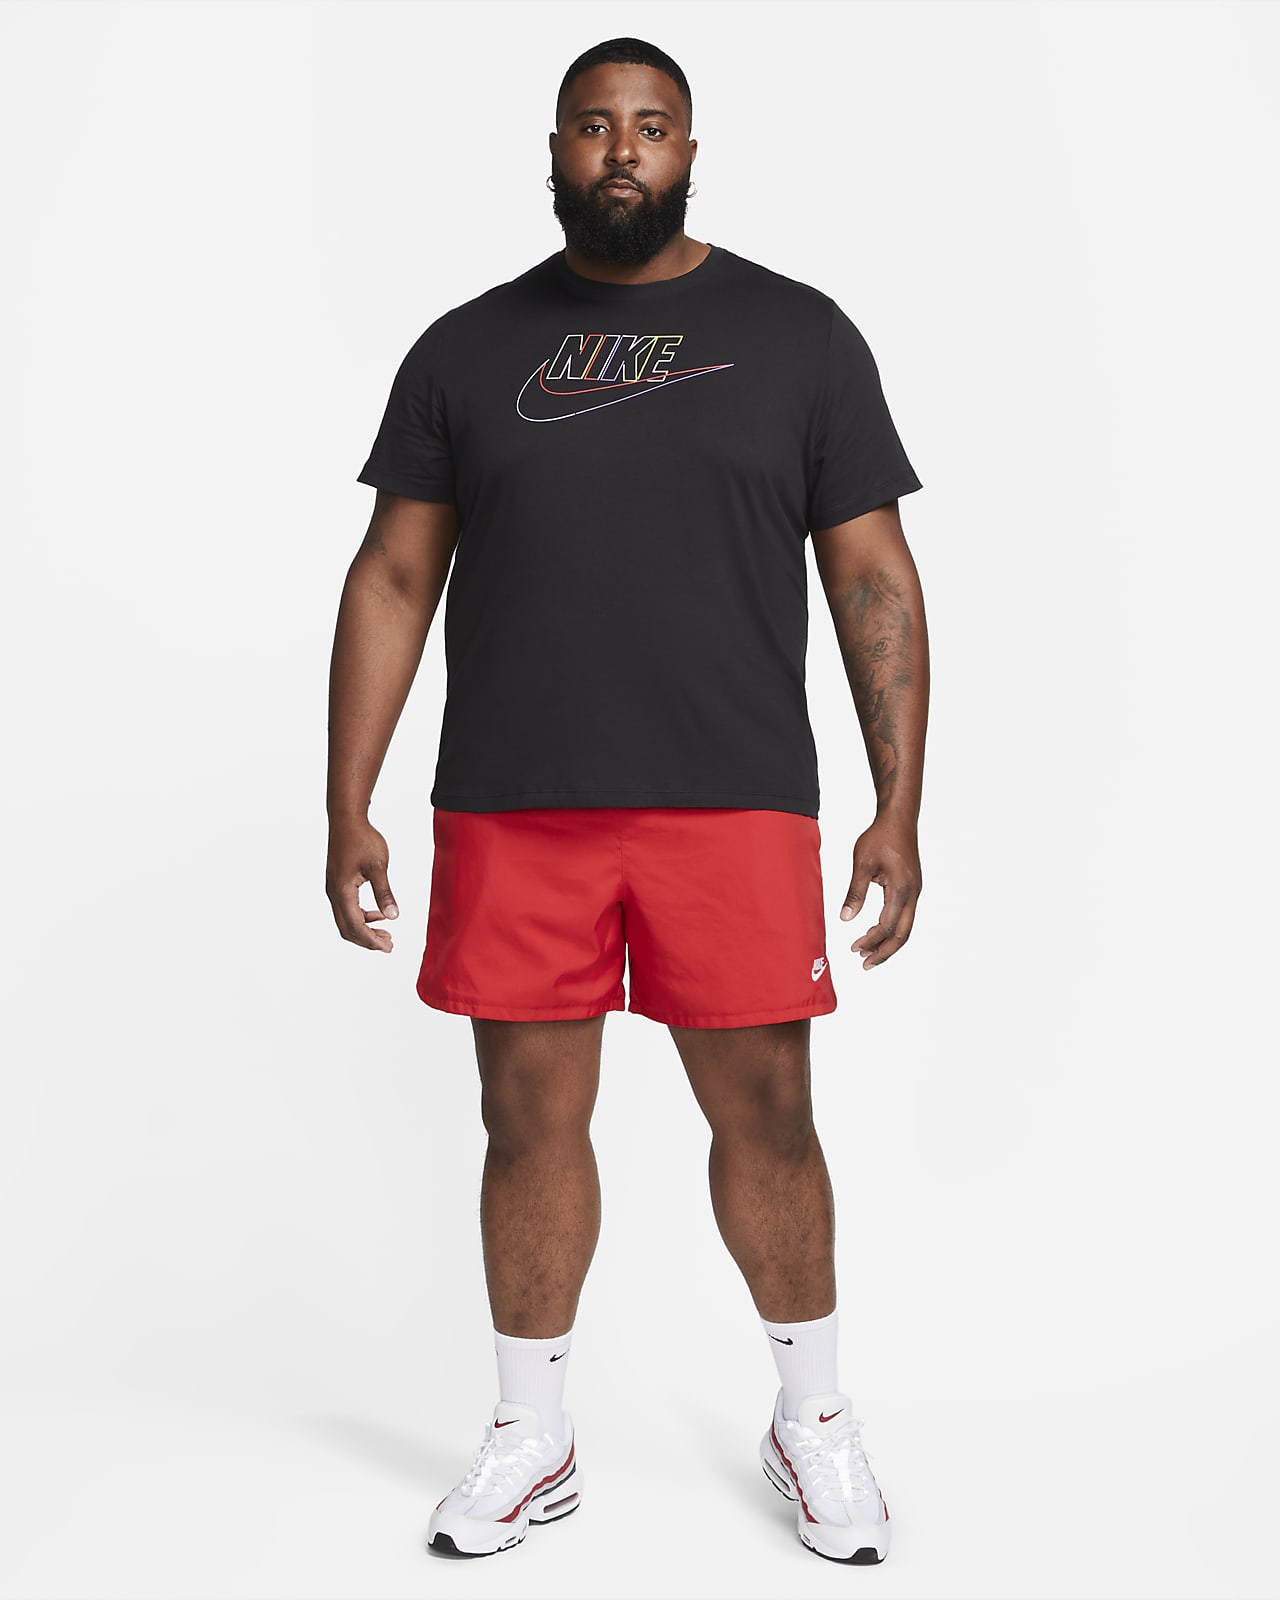 NIKE Sportswear Futura Logo-Print Cotton-Jersey T-Shirt for Men